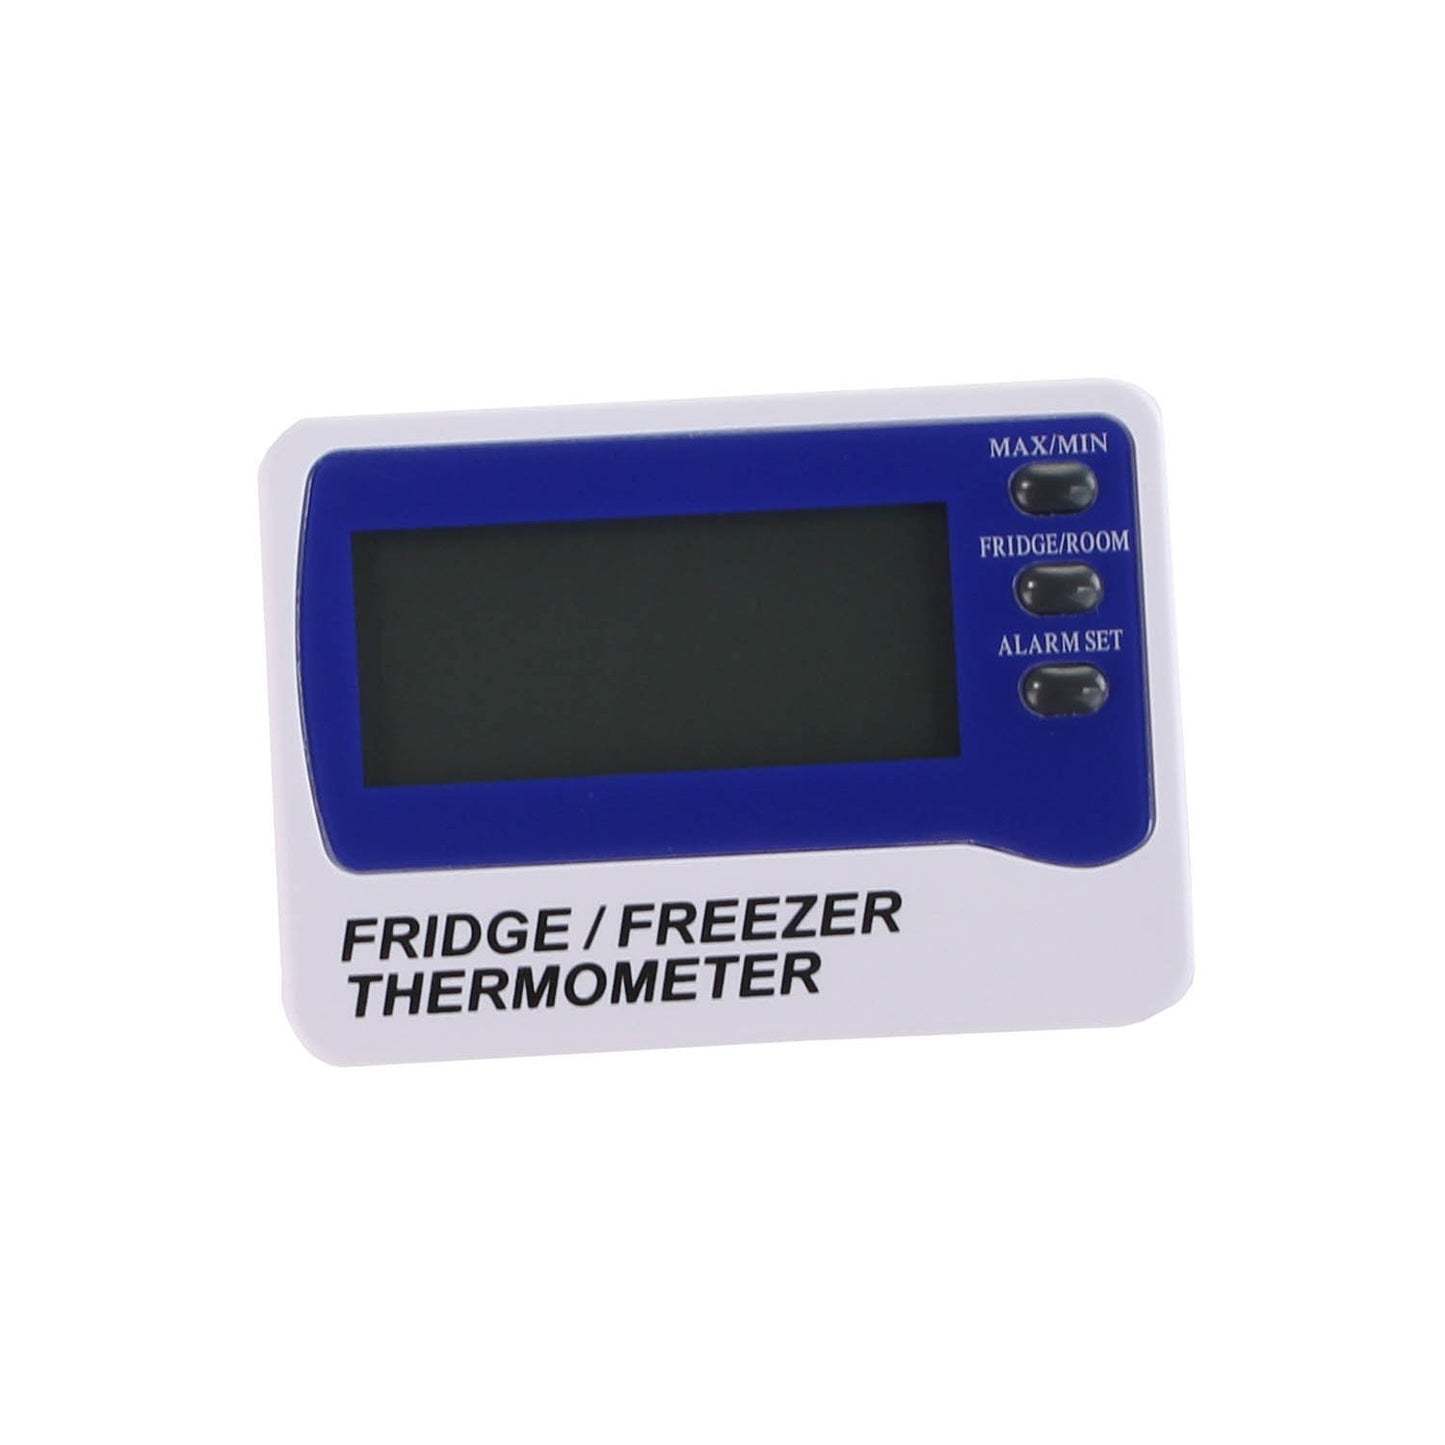 Digital Fridge / Freezer Vaccine Fridge Thermometer - Min / Max